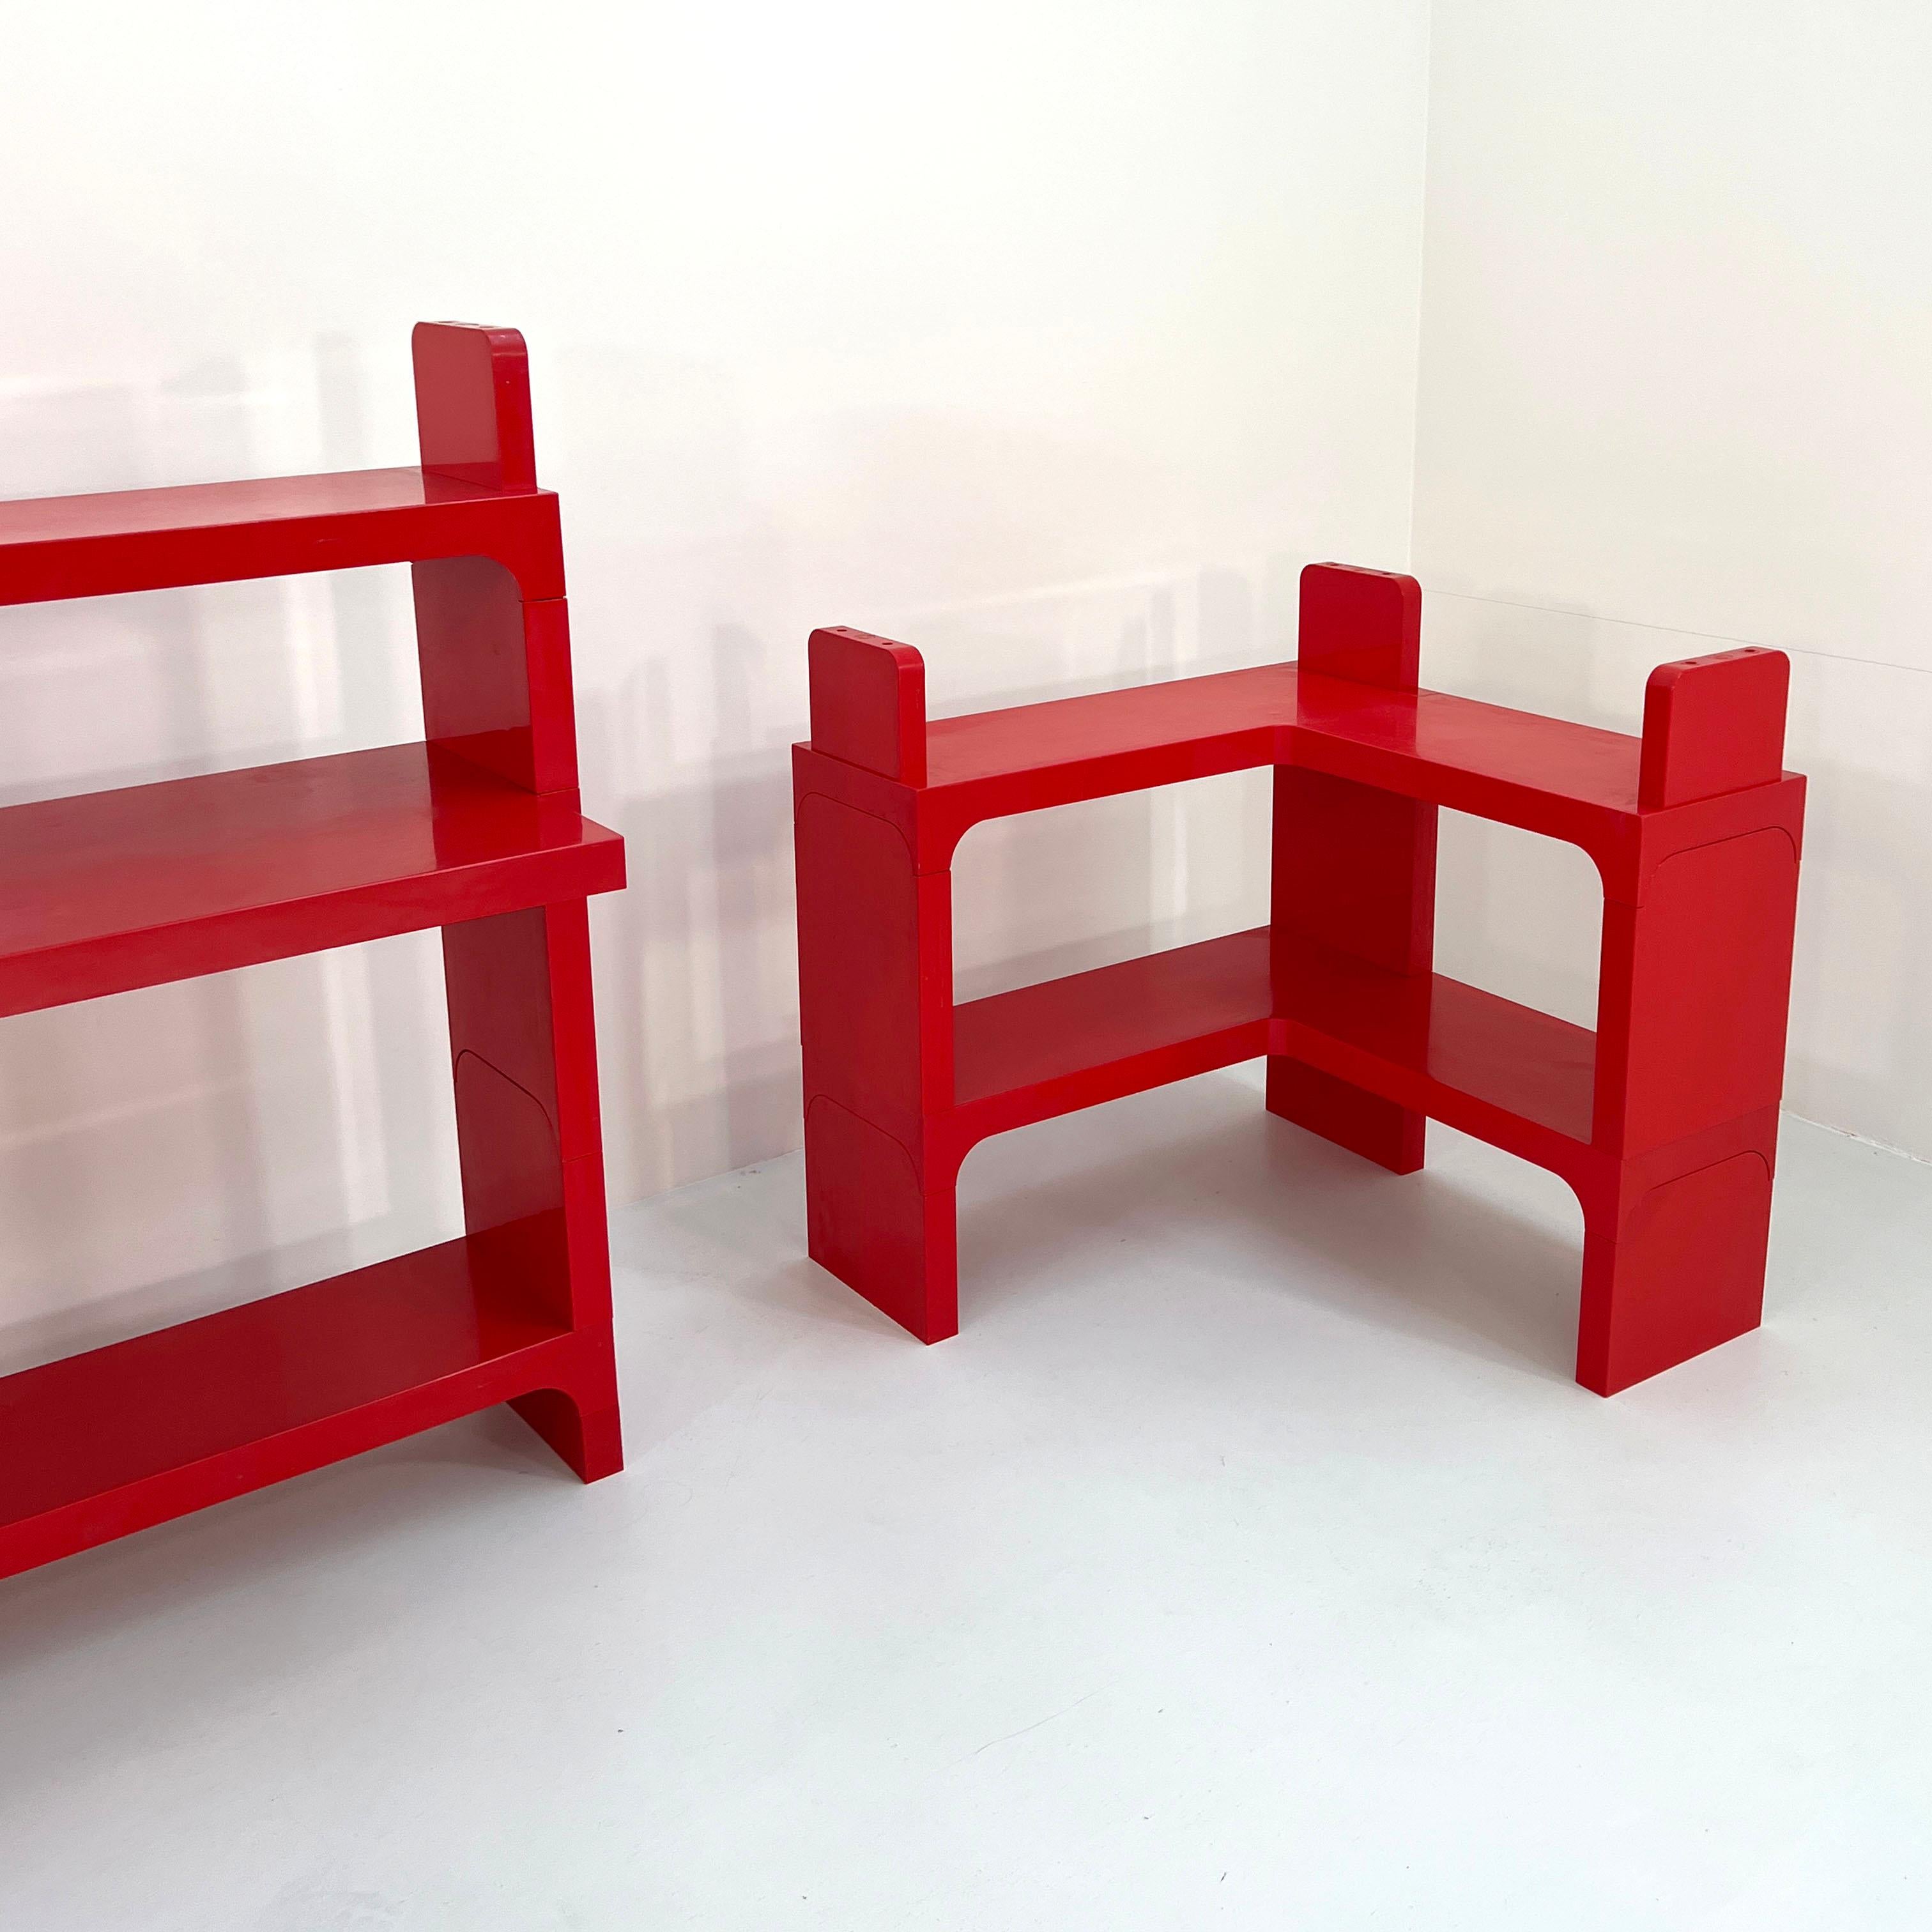 Italian Red Modular Shelf with Desk by Olaf von Bohr for Kartell, 1970s